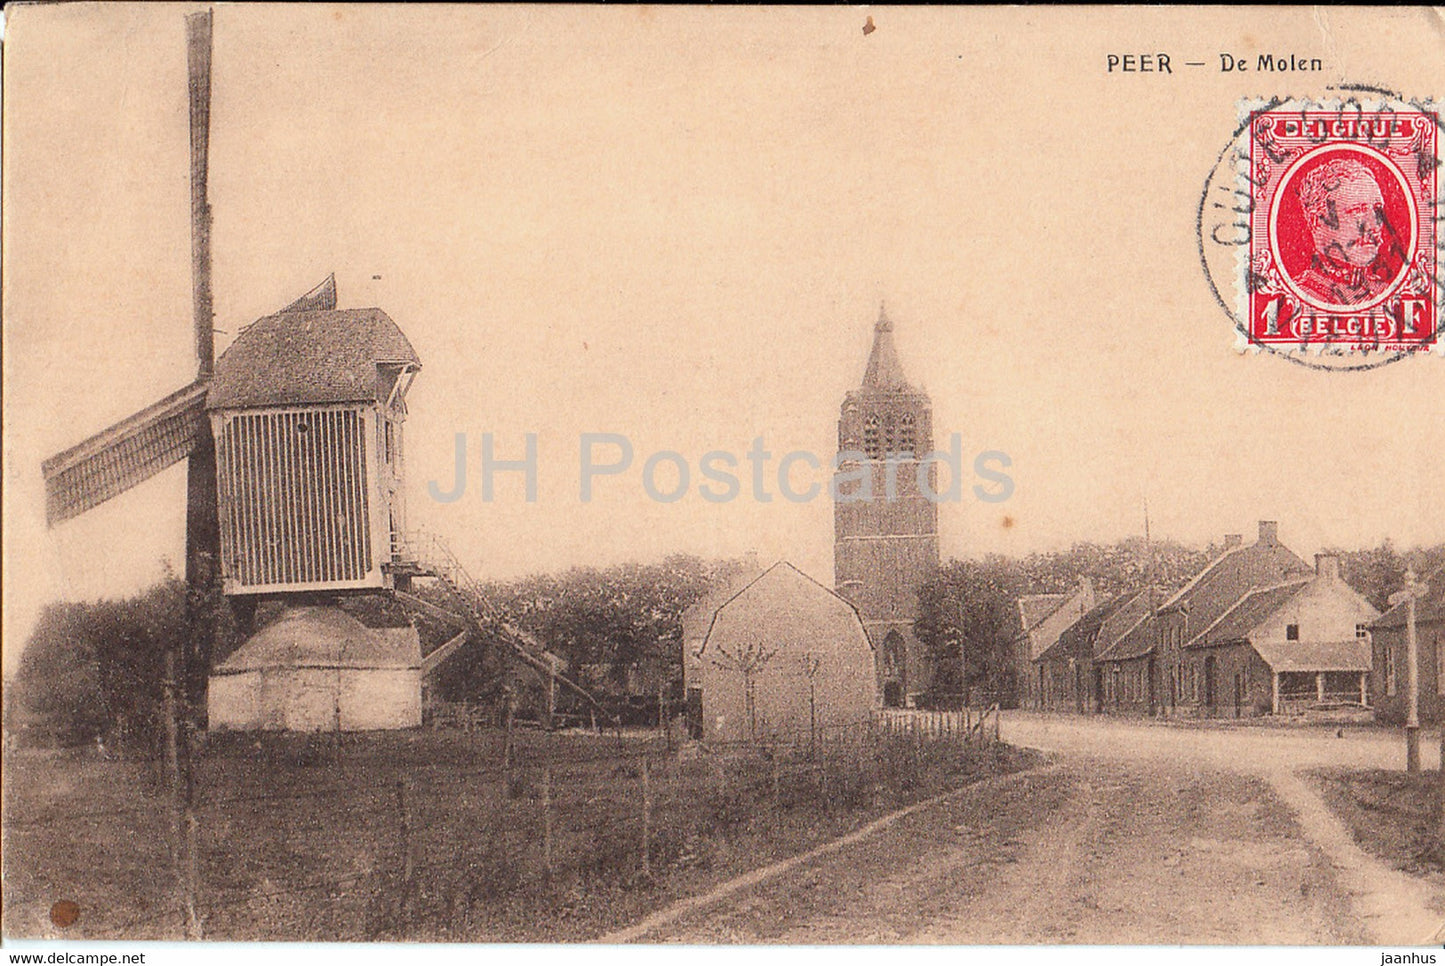 Peer - De Molen - windmill - old postcard - 1931 - Belgium - used - JH Postcards